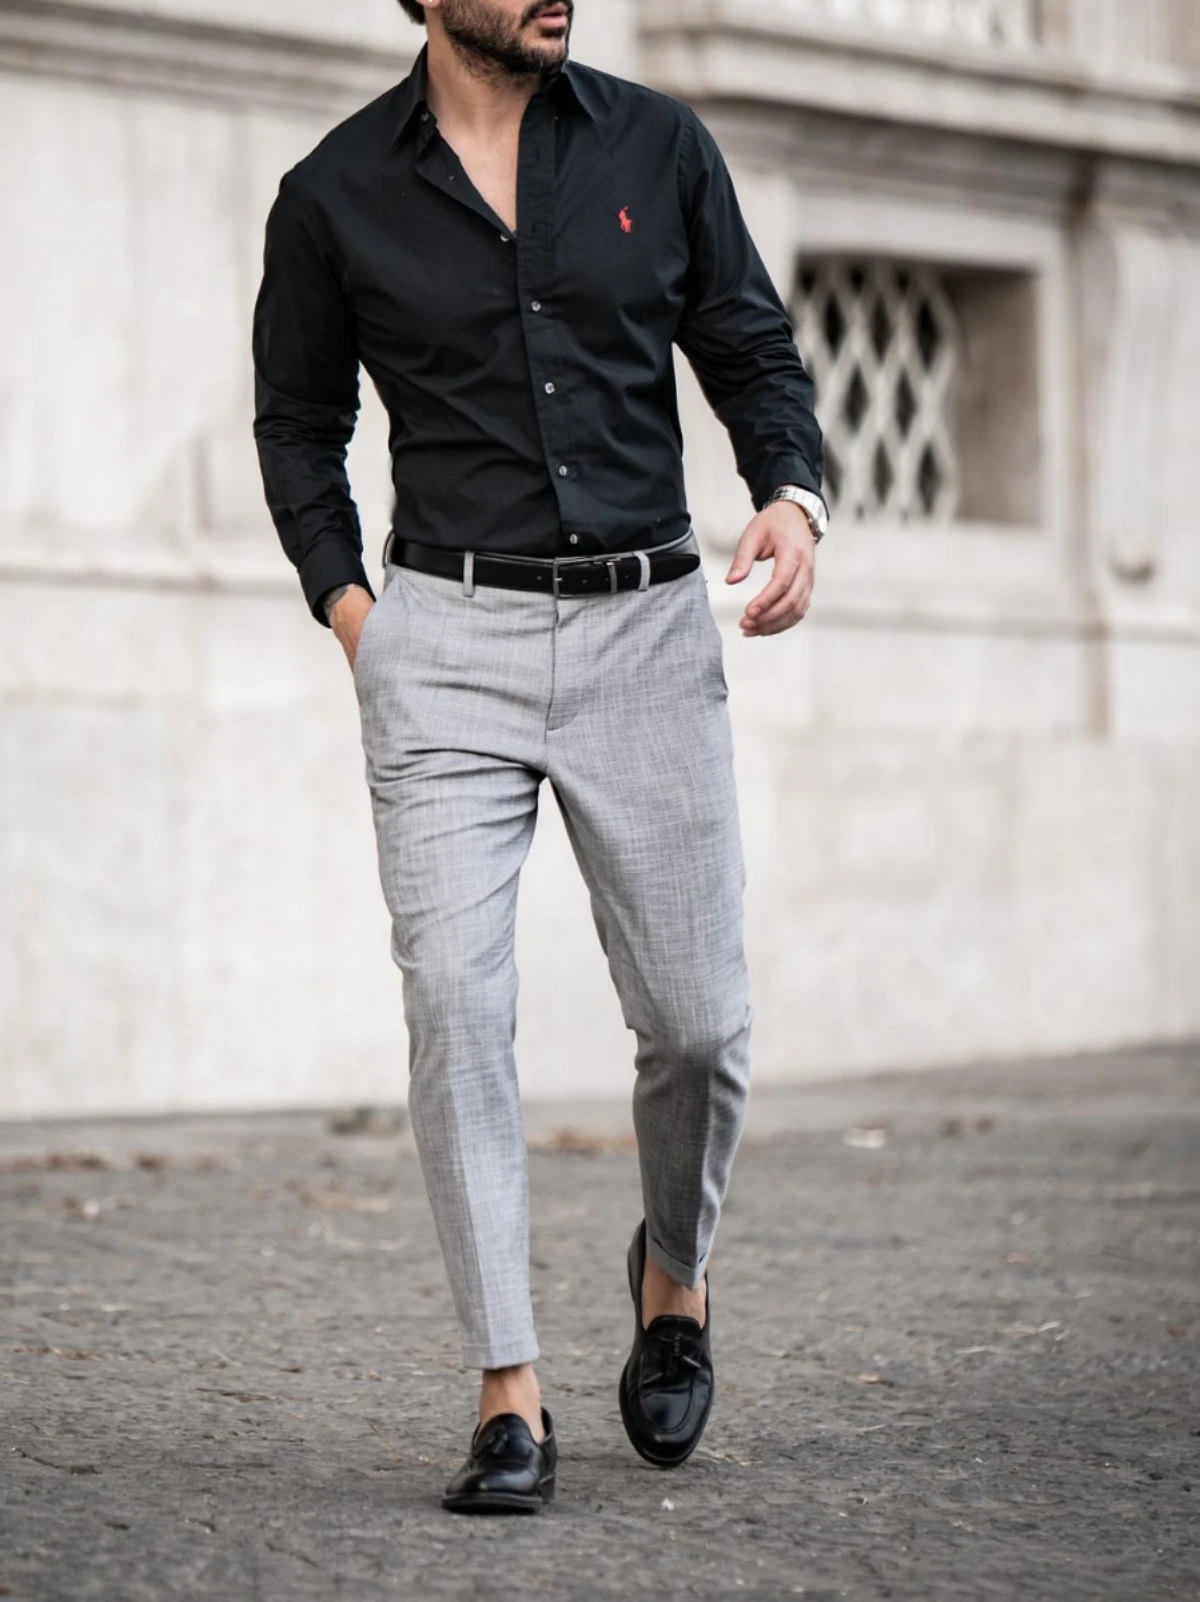 Black shirt with light grey pants